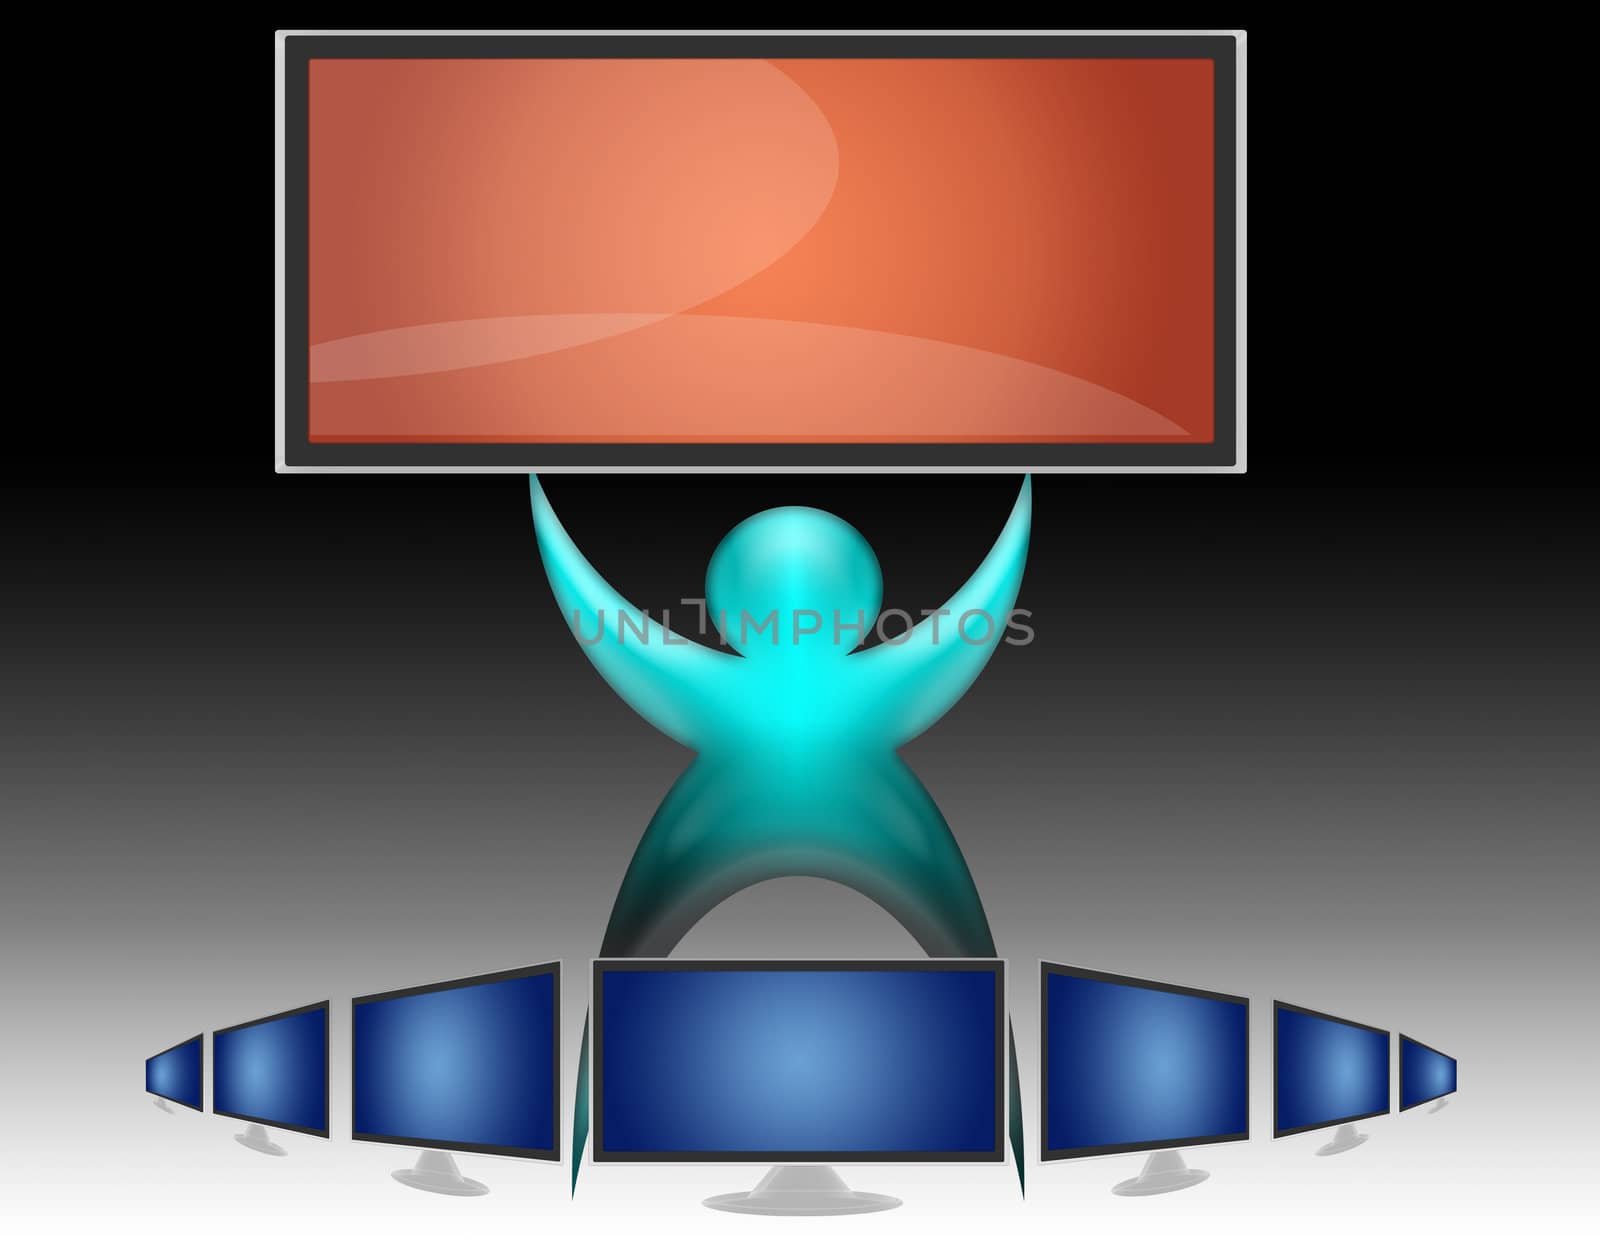 TV LCD flat screen (07) by walex101